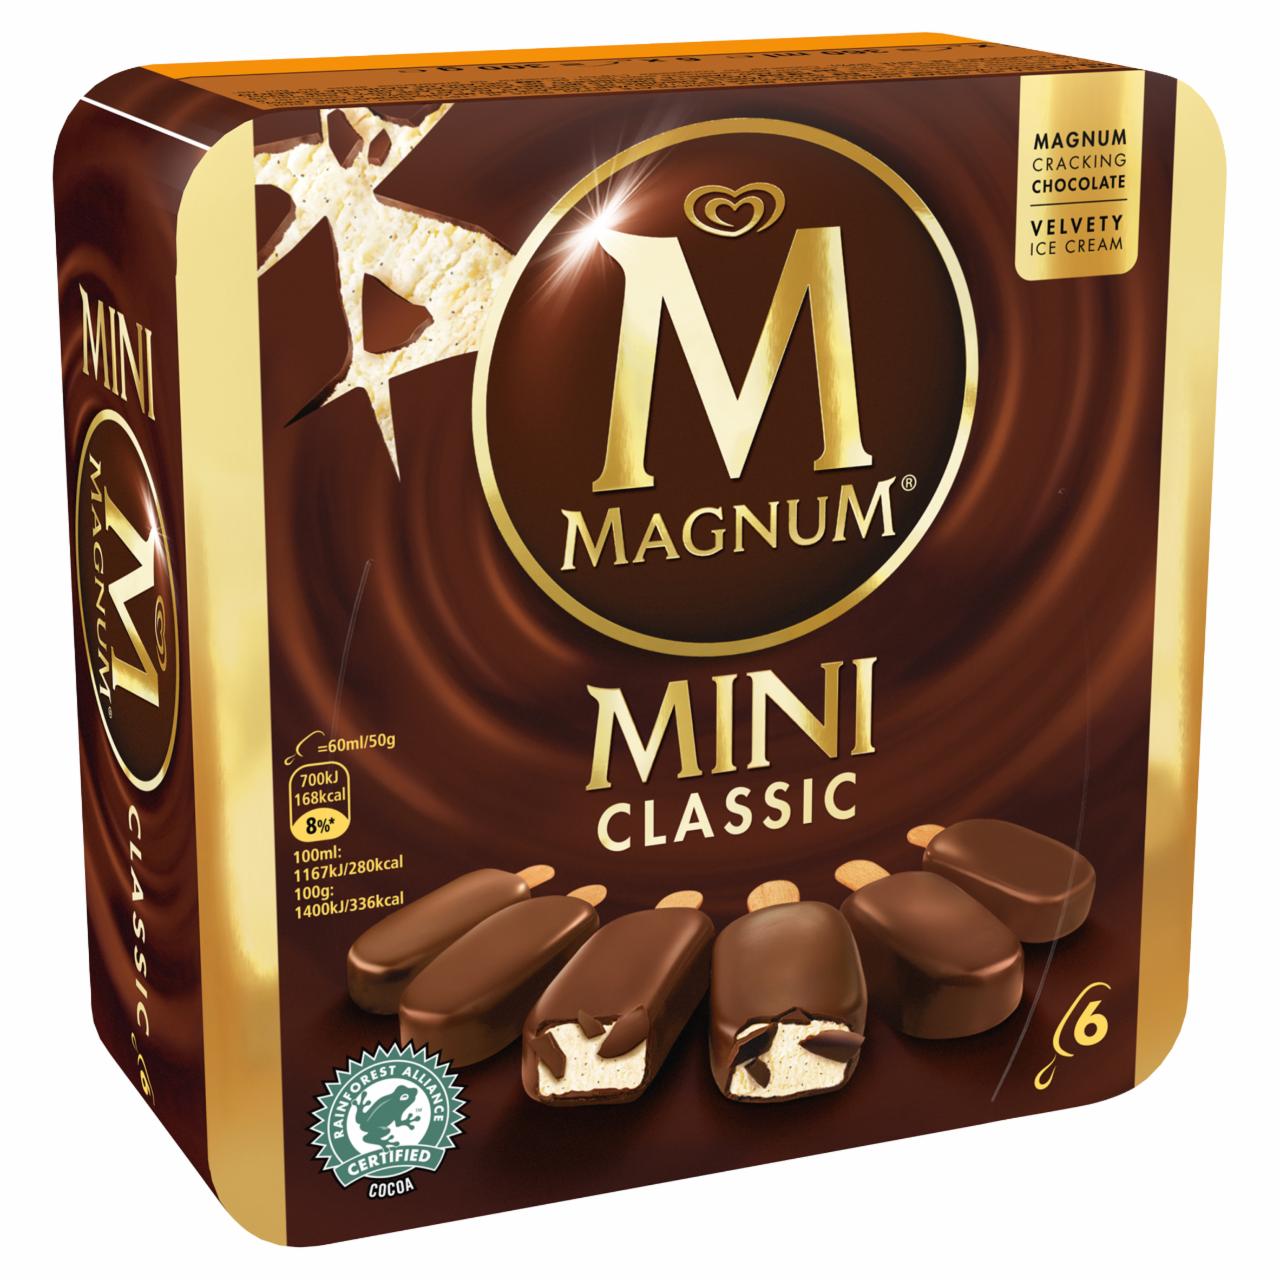 Képek - Magnum Mini classic vanília multipack jégkrém 6 x 60 ml